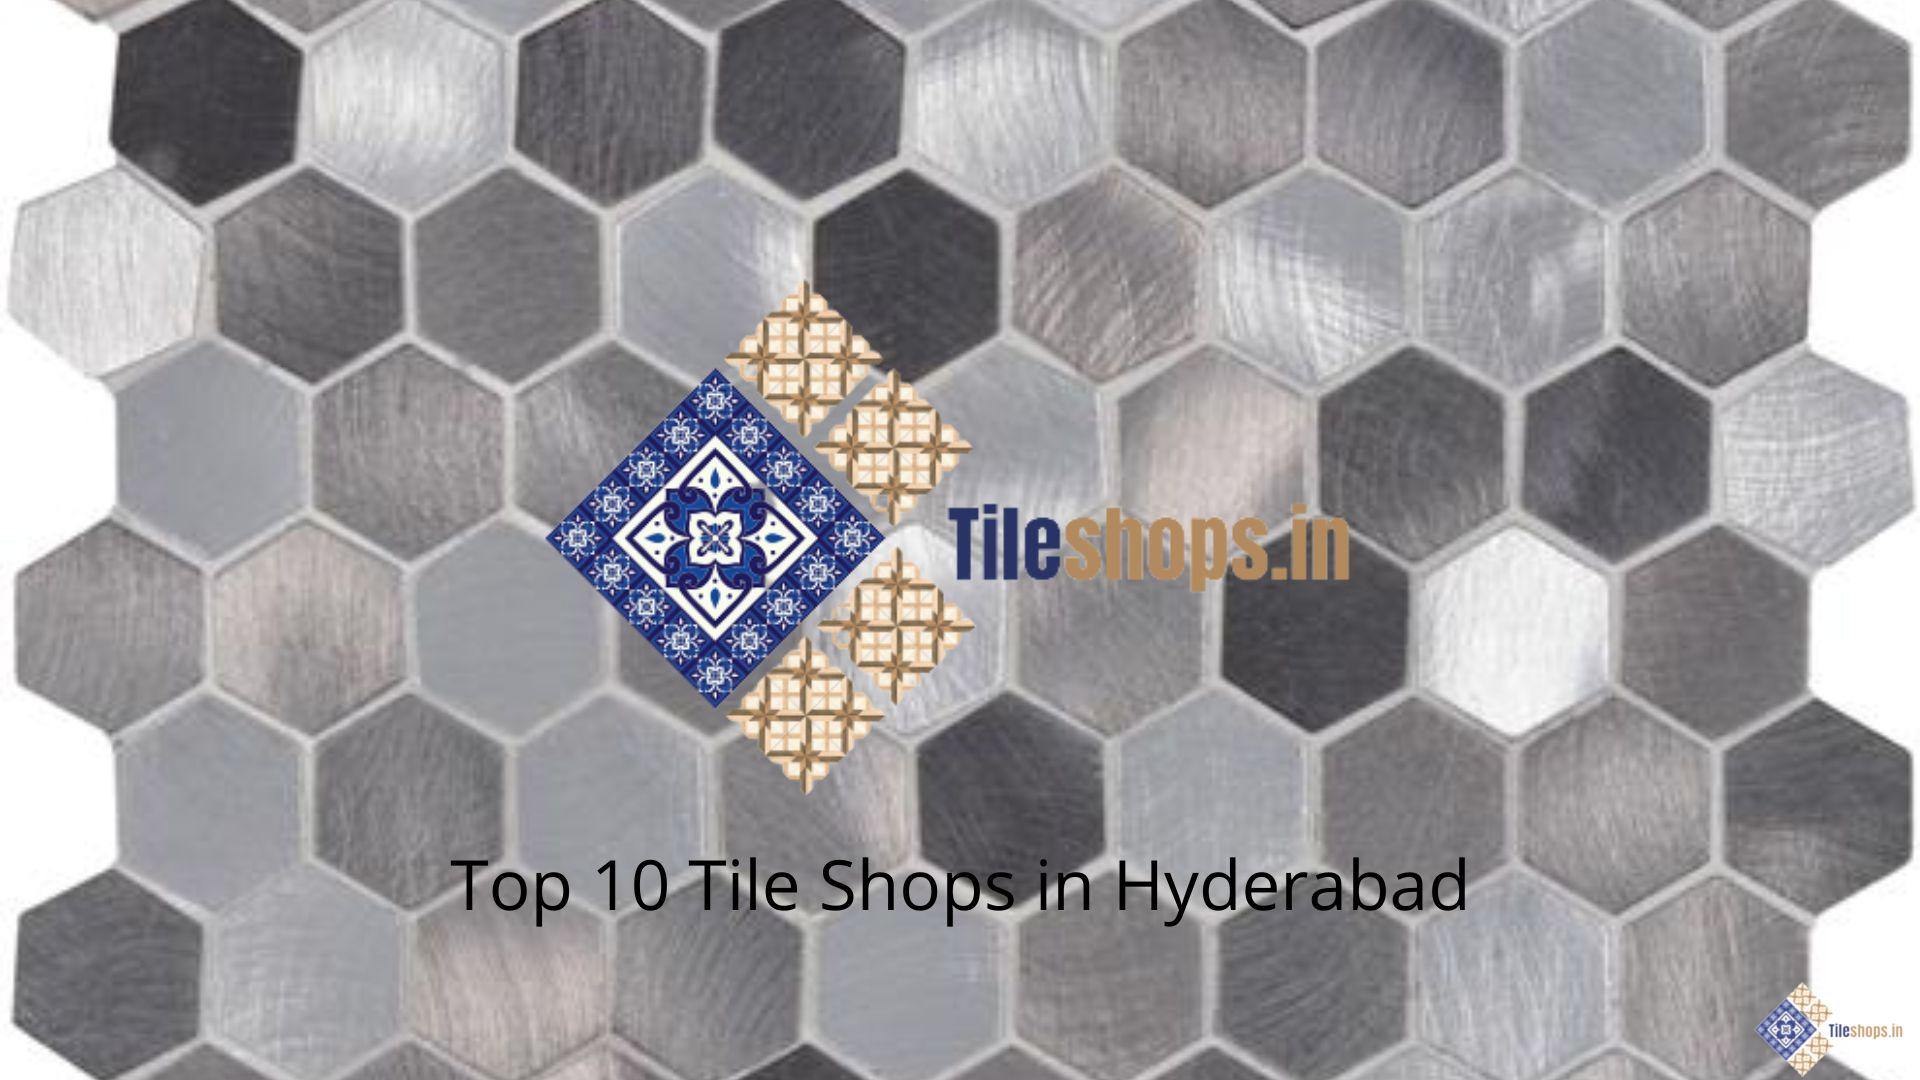 Top 10 Tile Shops in Hyderabad